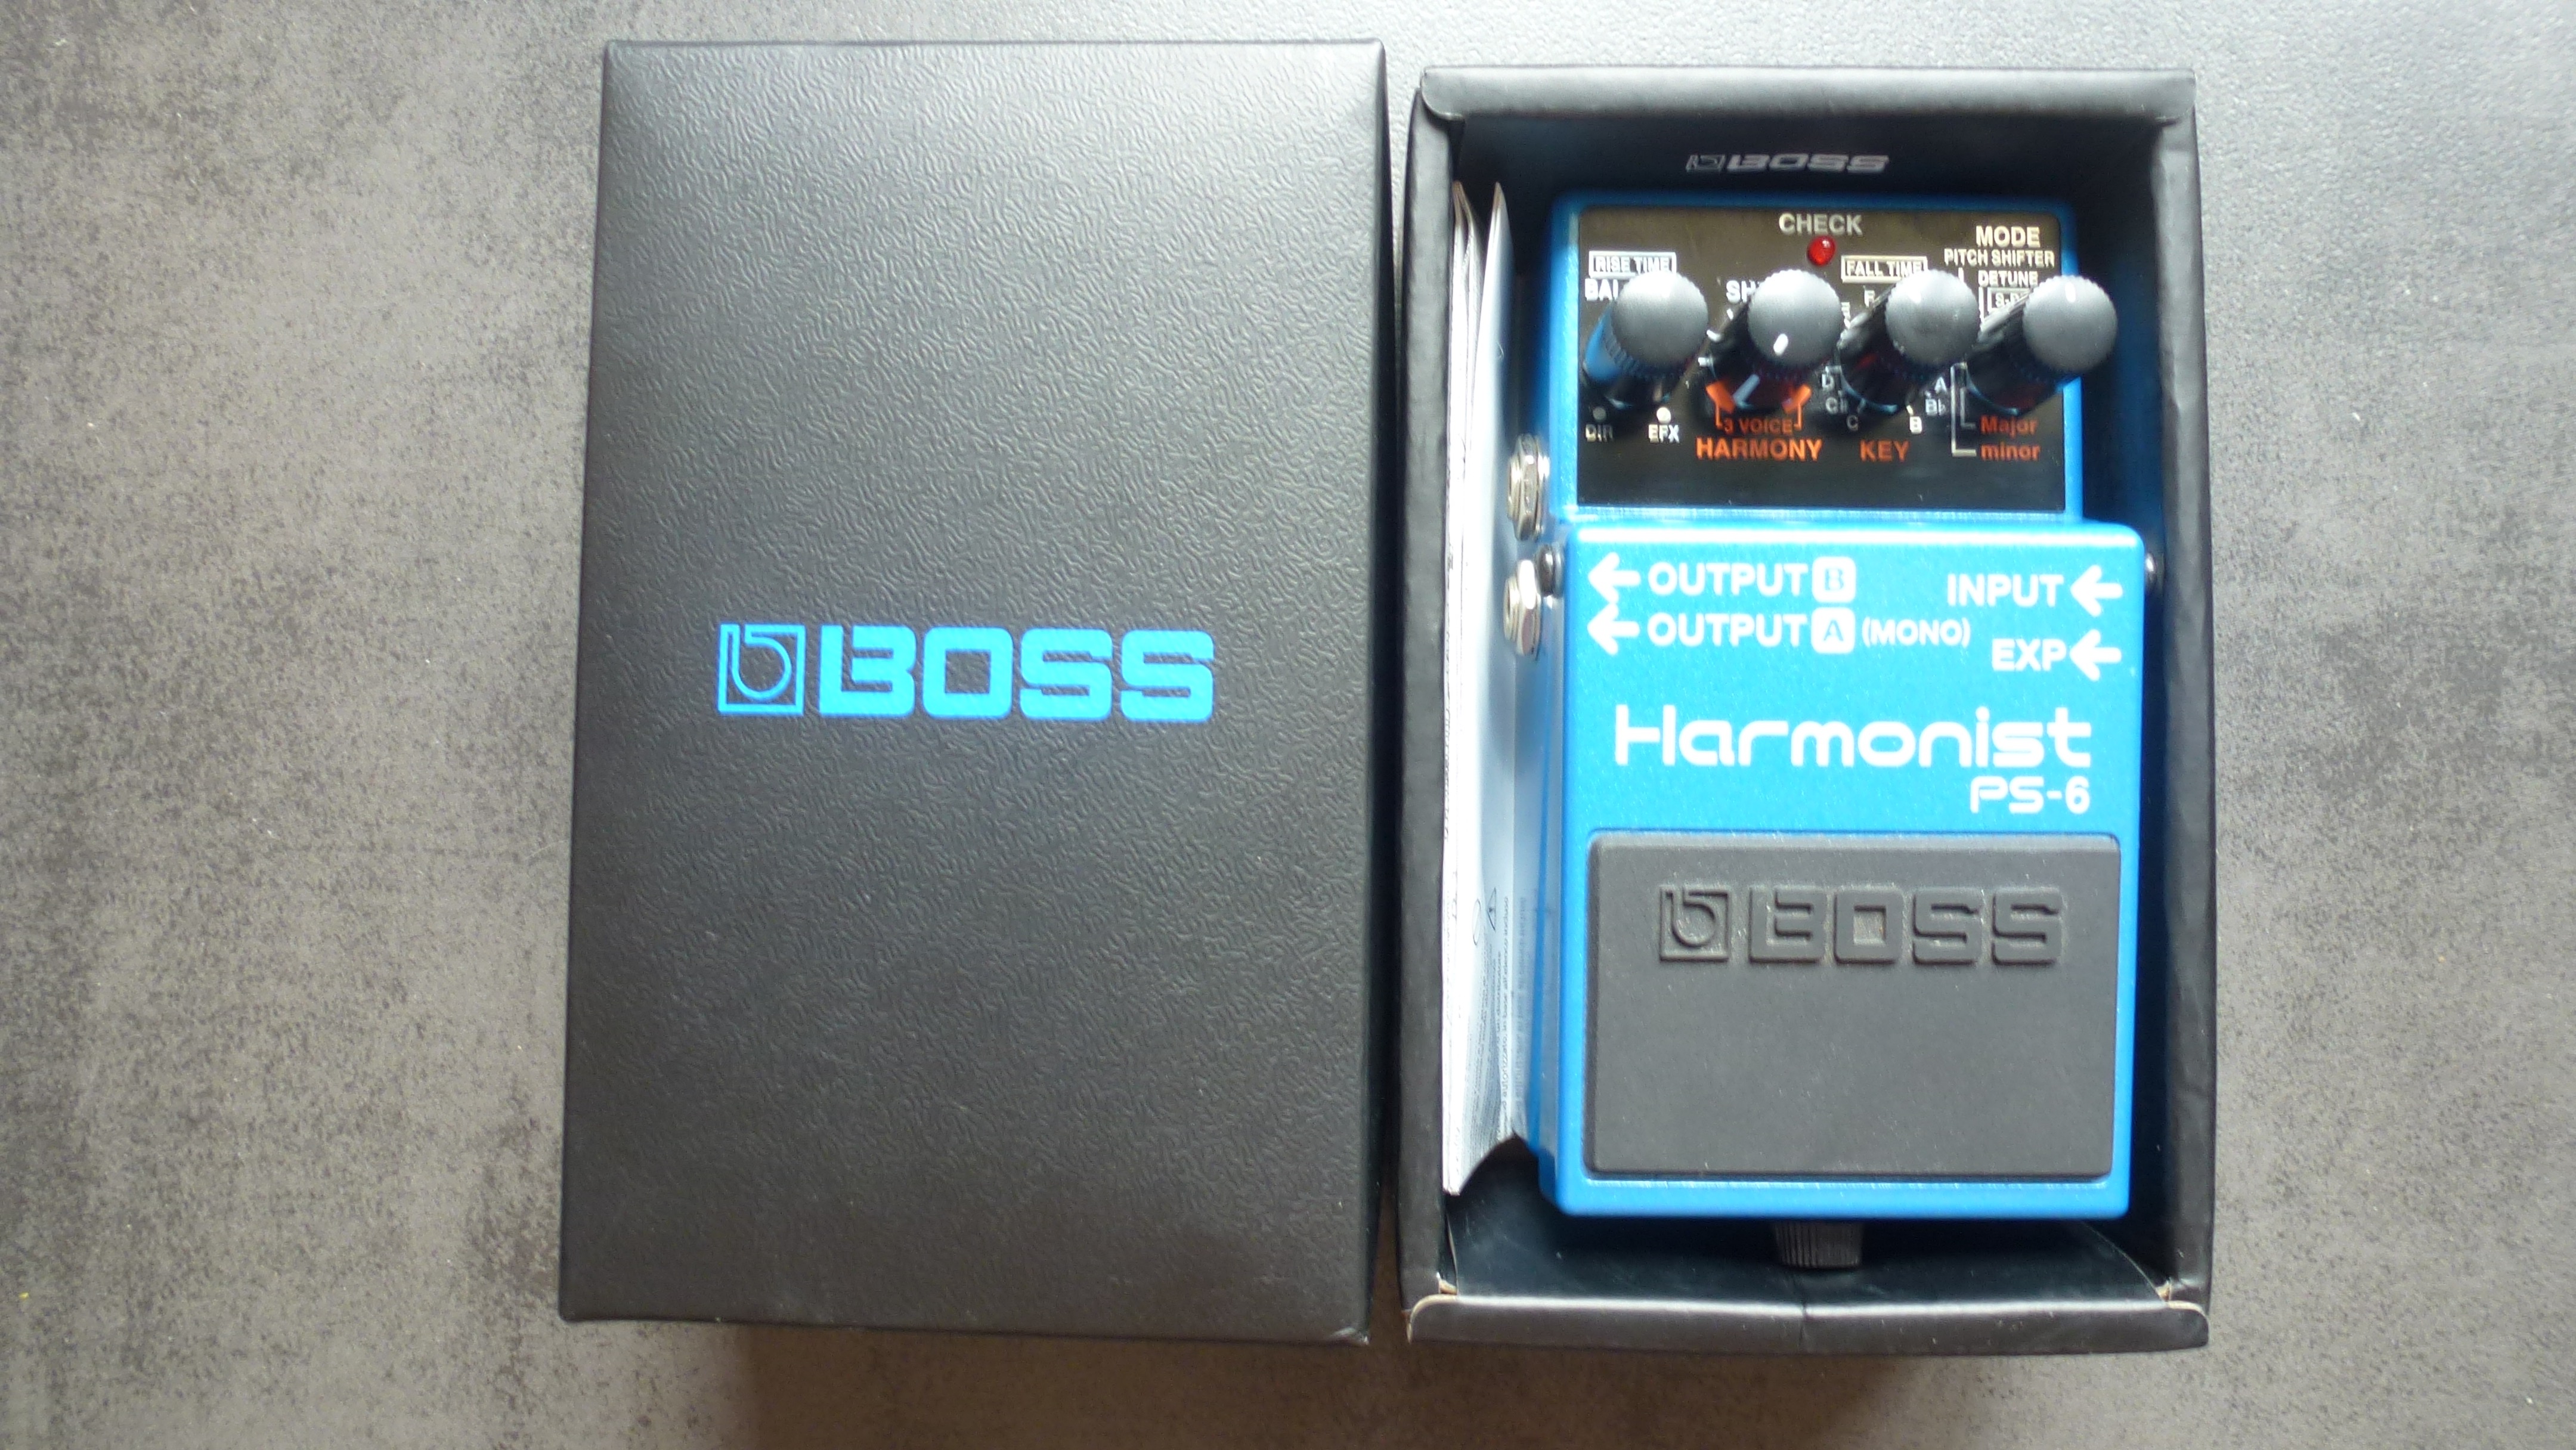 PS-6 HARMONIST - Boss PS-6 Harmonist - Audiofanzine